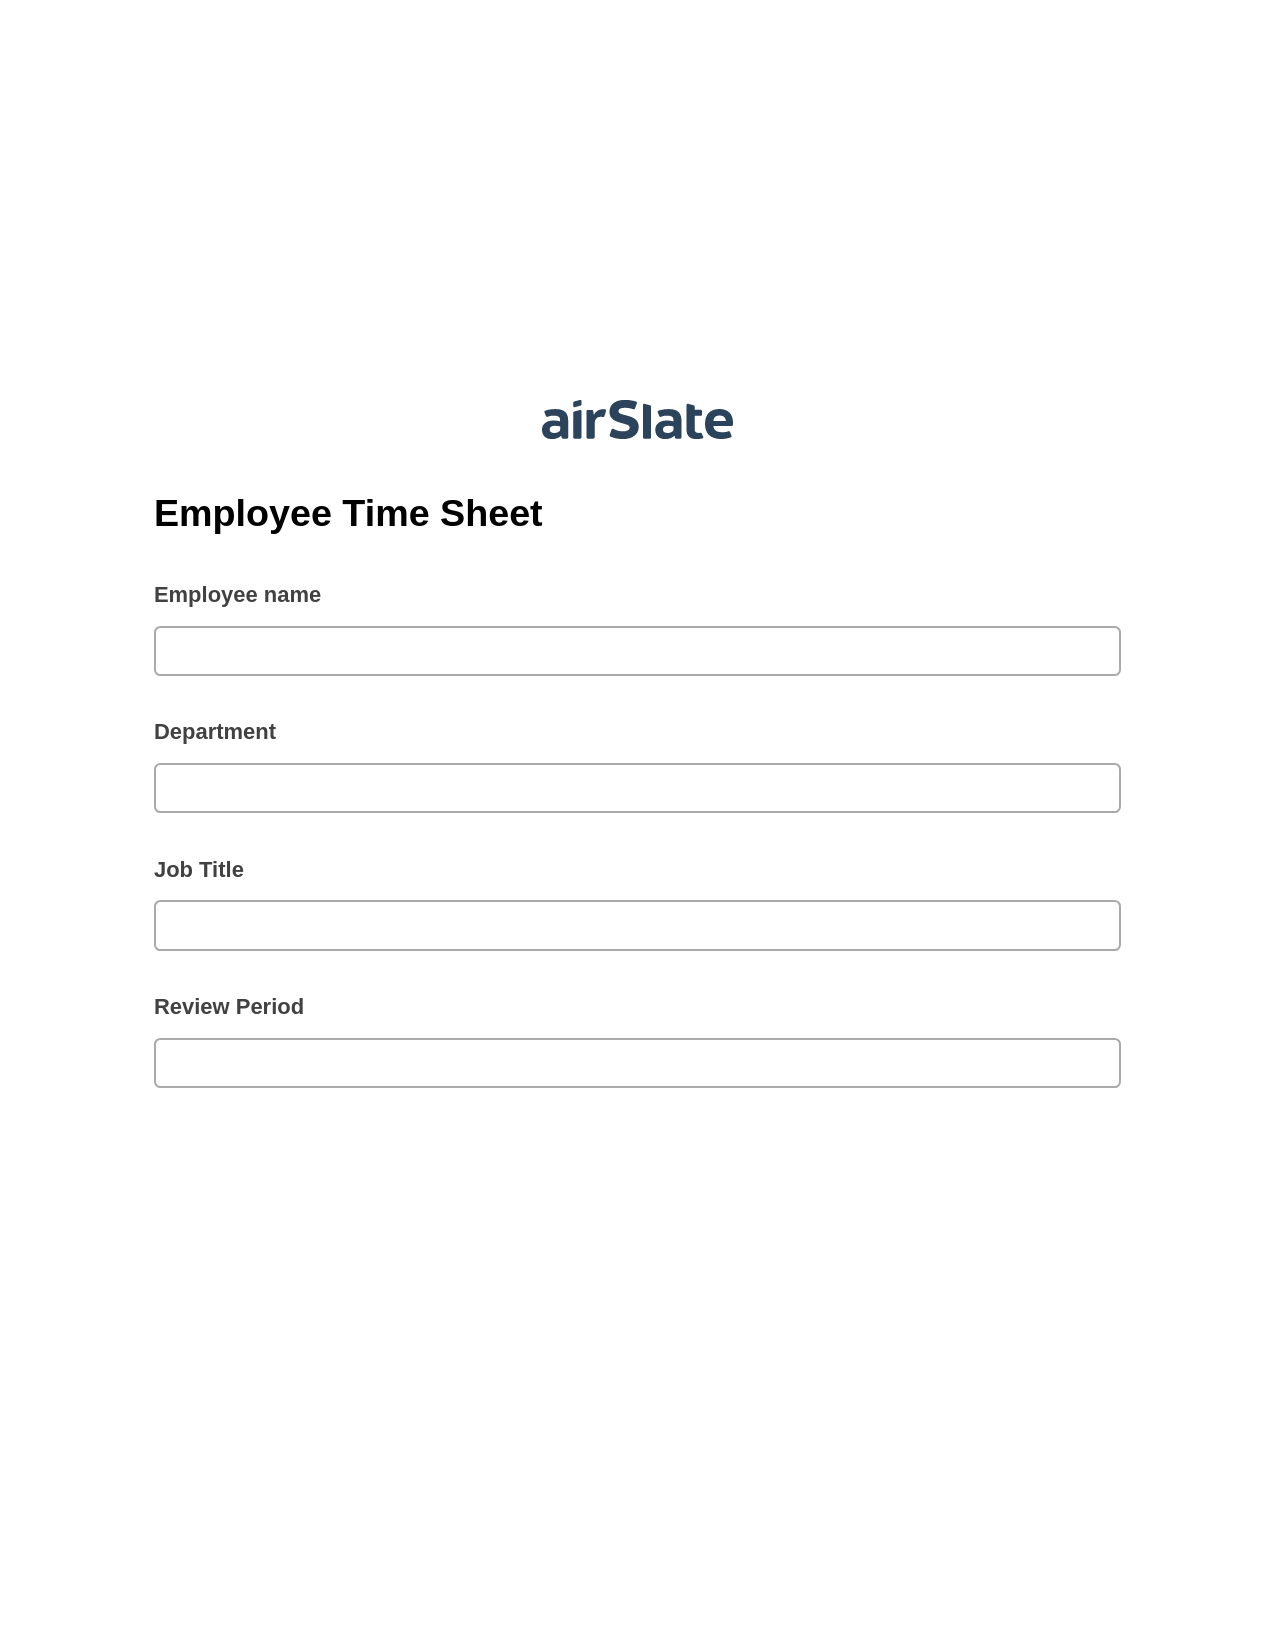 Multirole Employee Time Sheet Pre-fill Document Bot, Update Audit Trail Bot, Export to Smartsheet